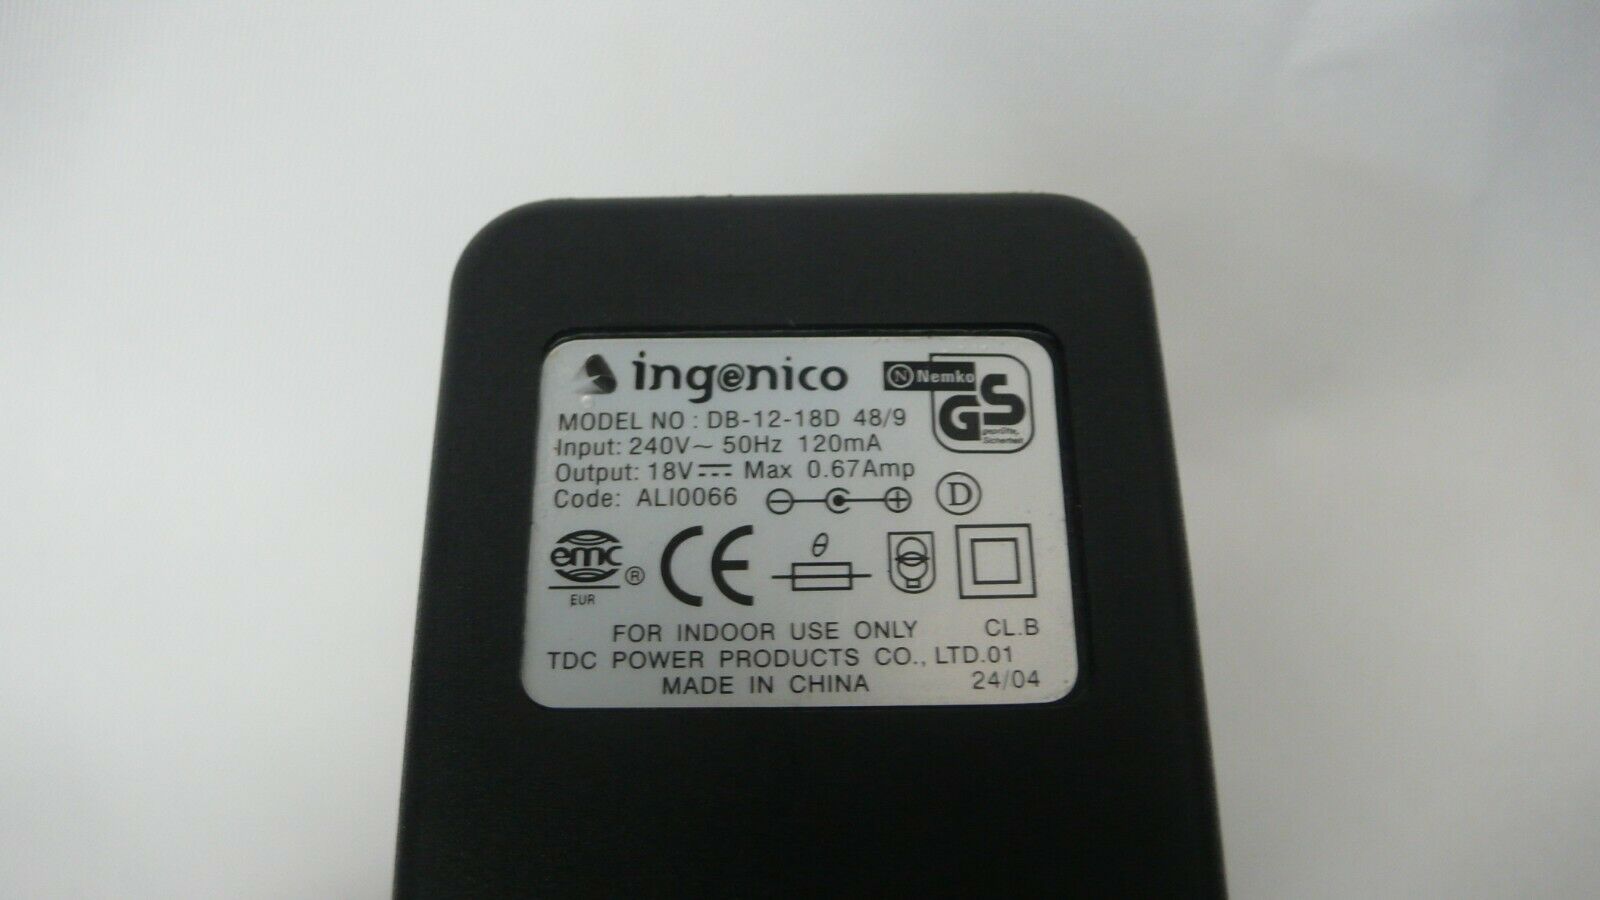 New INGENICO DB-12-18D 48/9 AC POWER SUPPLY ADAPTER 18V 0.67A UK PLUG Specification: Brand: Ingenico Mo